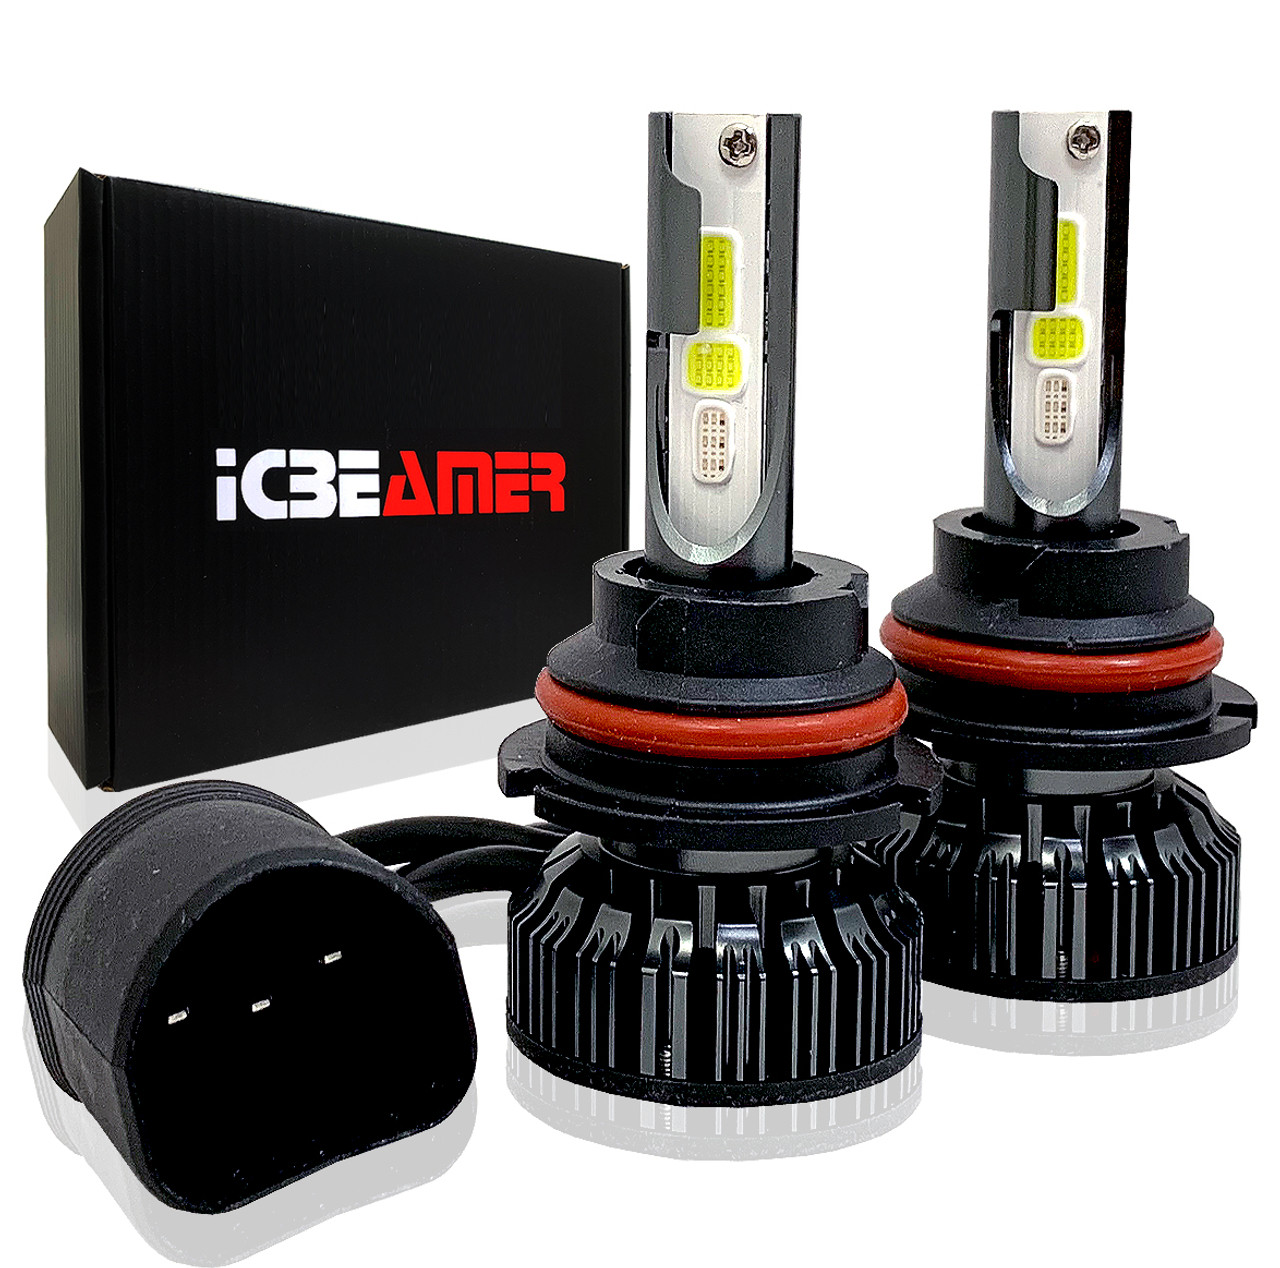 ICBEAMER 9004 HB1 Canbus LED COB Driving Headlight RGB Daytime Running  Light Replace Halogen bulb control Smartphone App ICBEAMER